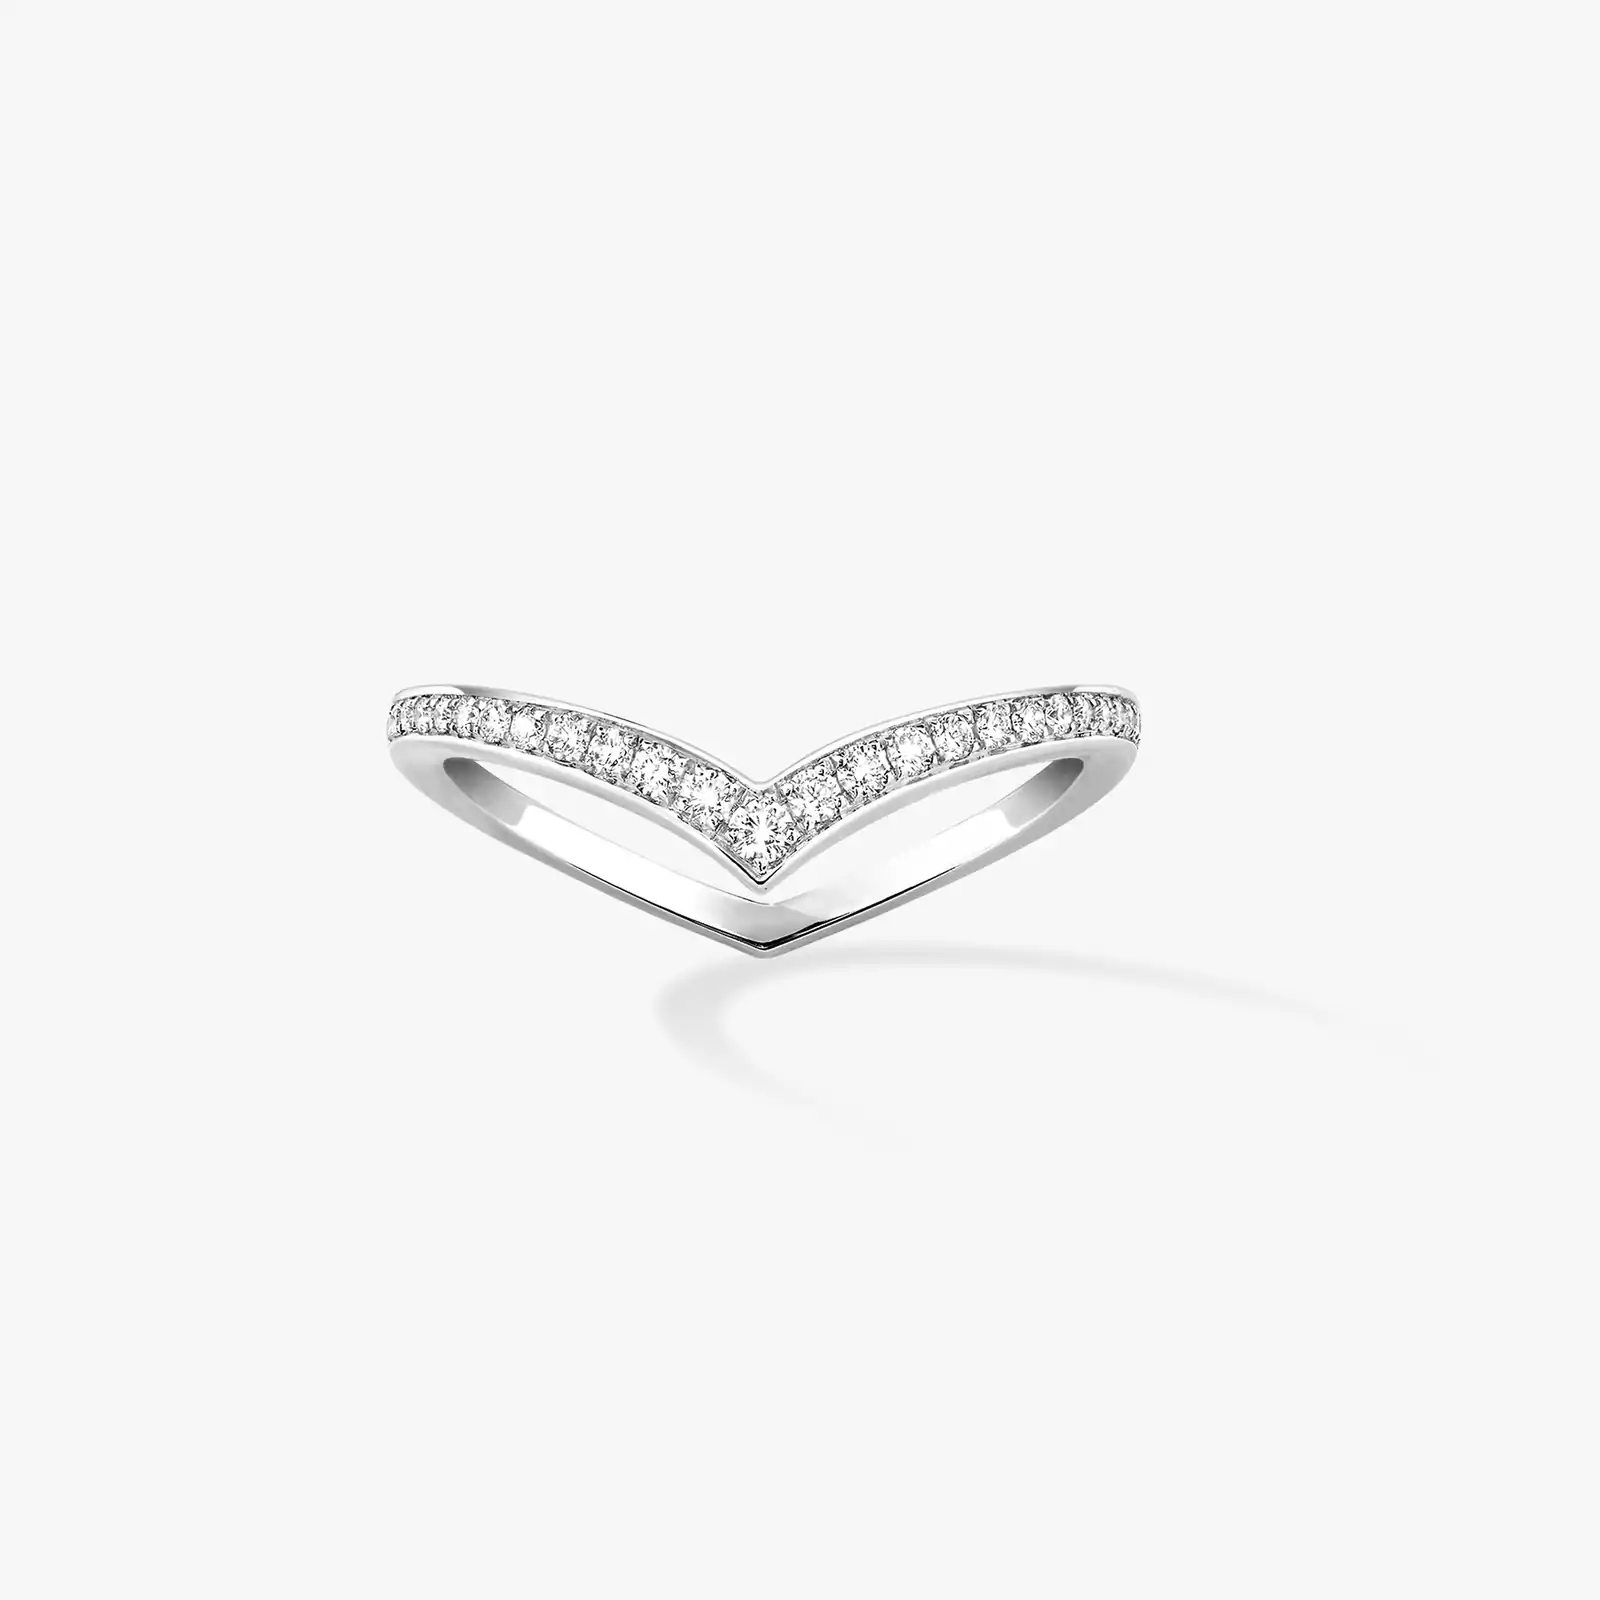 Fiery Diamond Pavé Wedding Ring White Gold For Her Diamond Ring 12088-WG